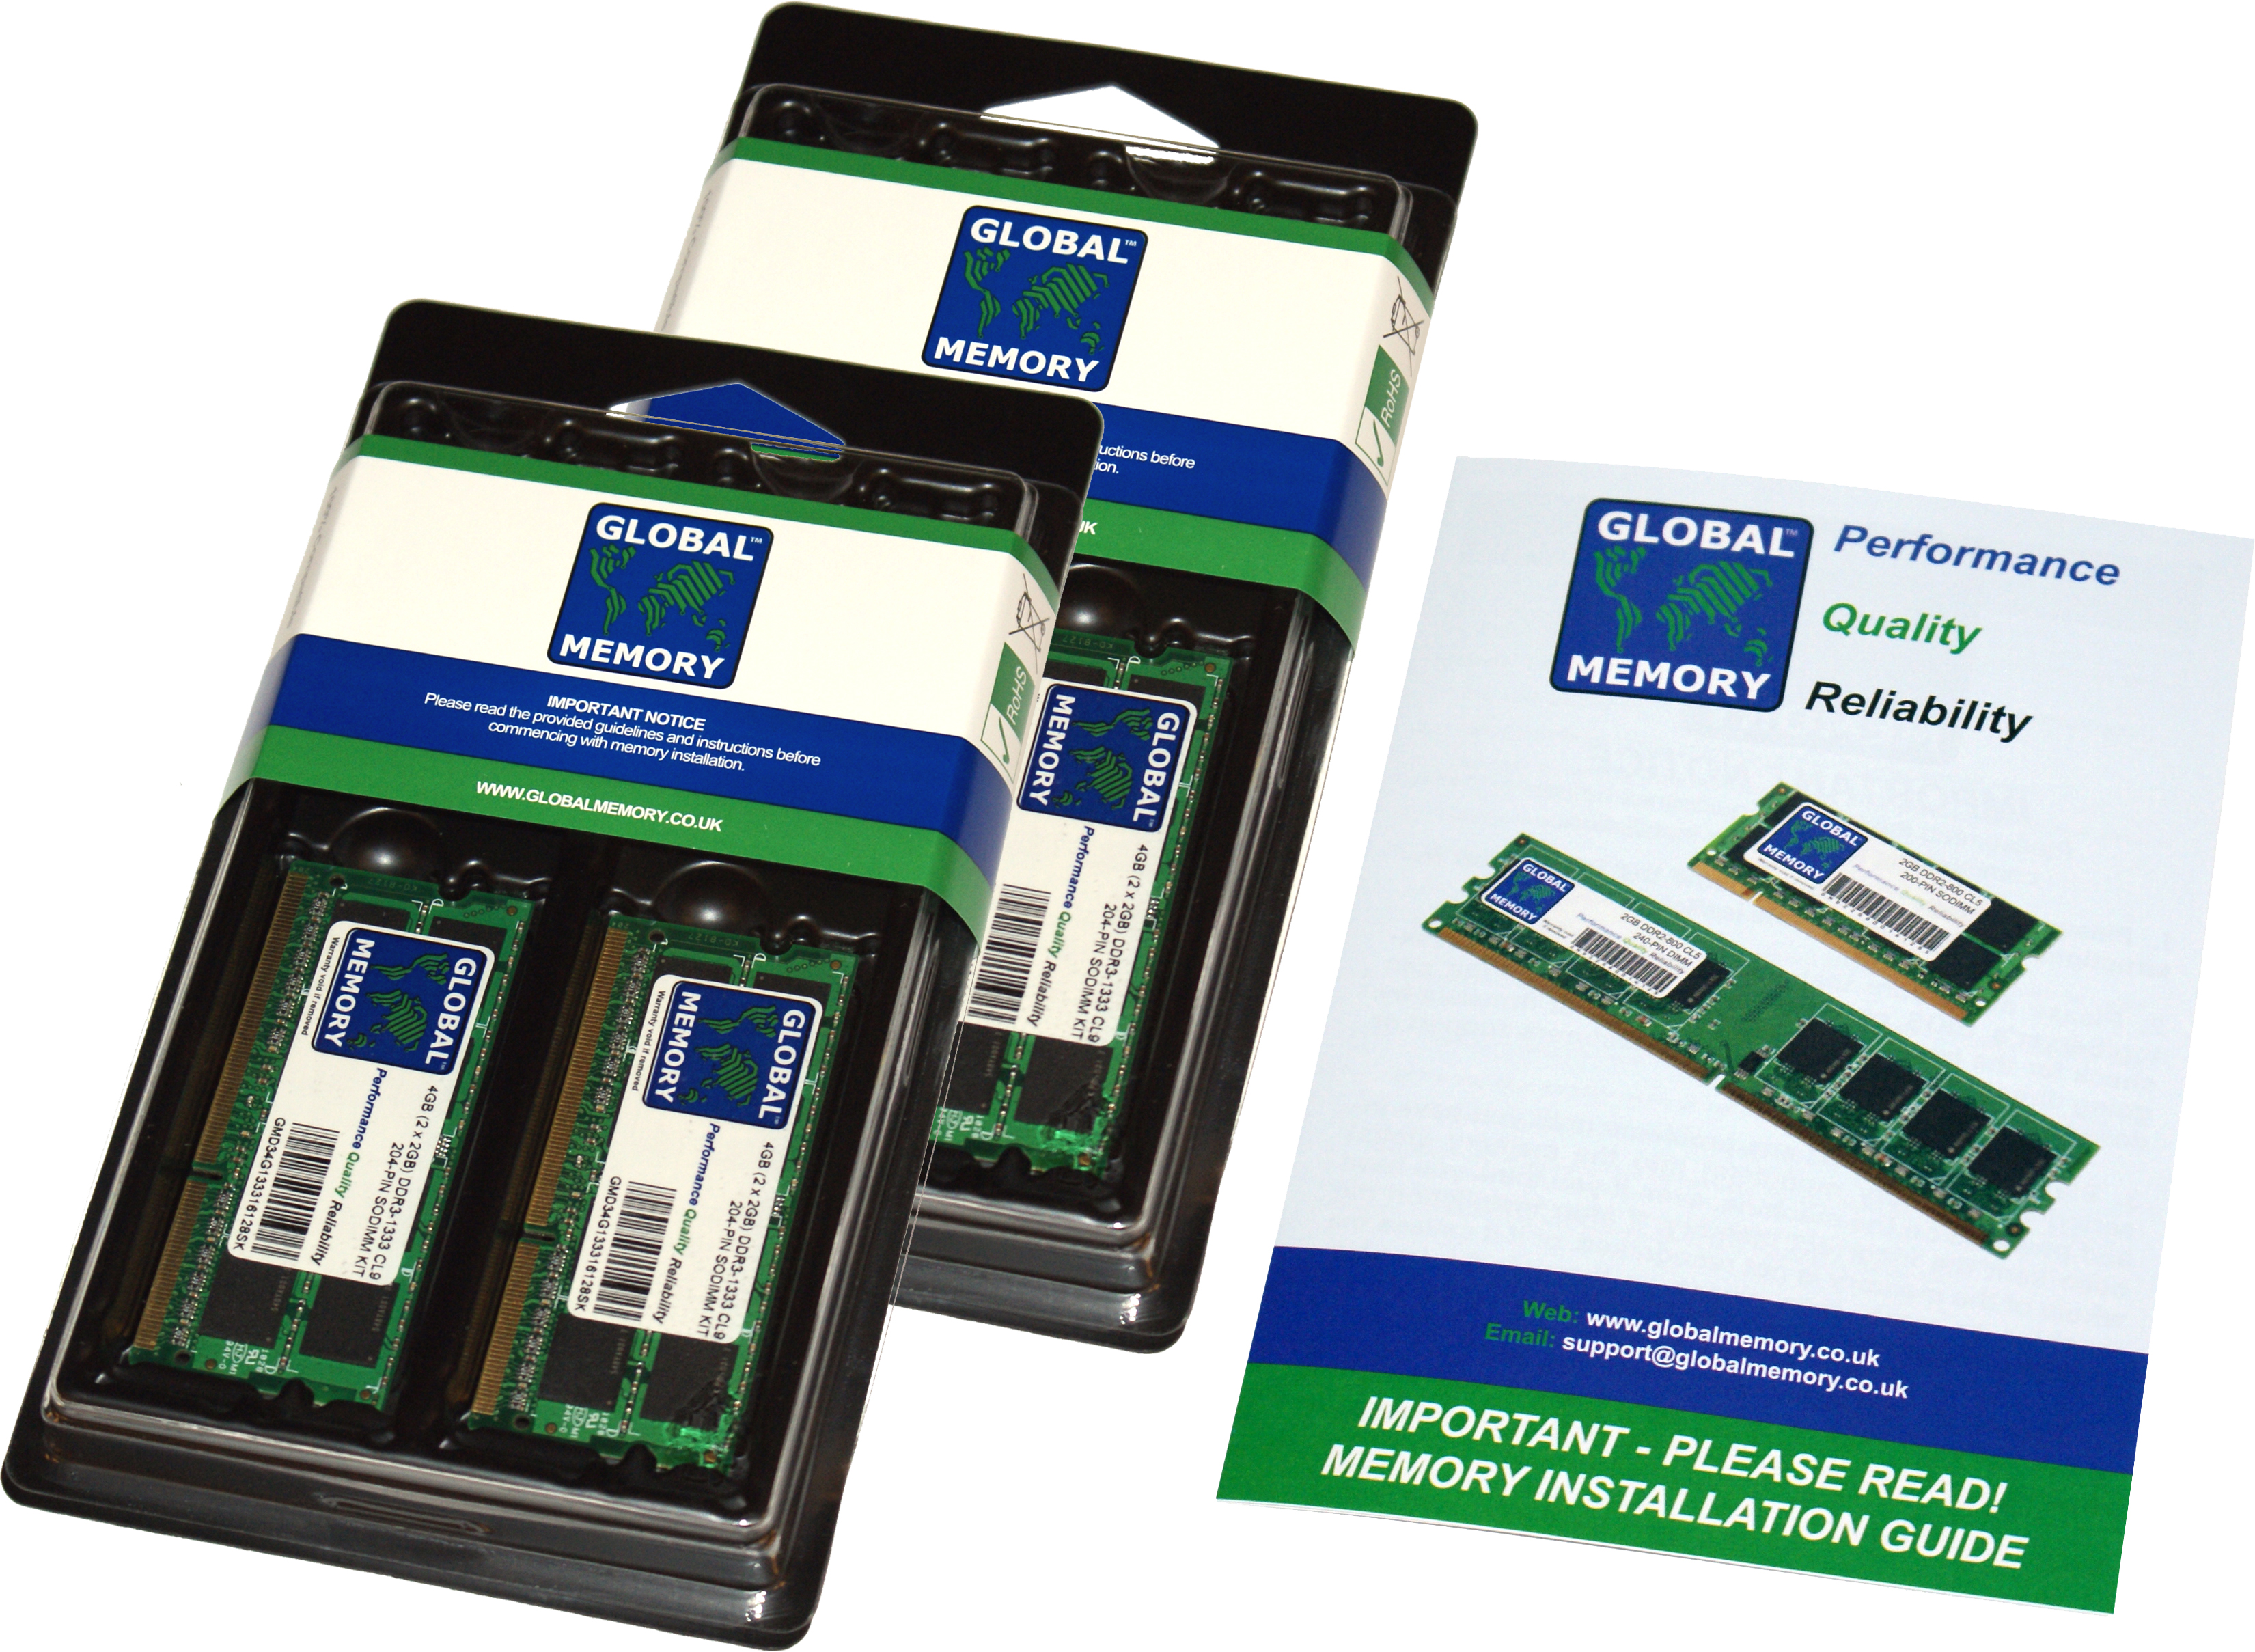 32GB (2 x 16GB) DDR4 2666MHz PC4-21300 260-PIN SODIMM MEMORY RAM KIT FOR HEWLETT-PACKARD LAPTOPS/NOTEBOOKS